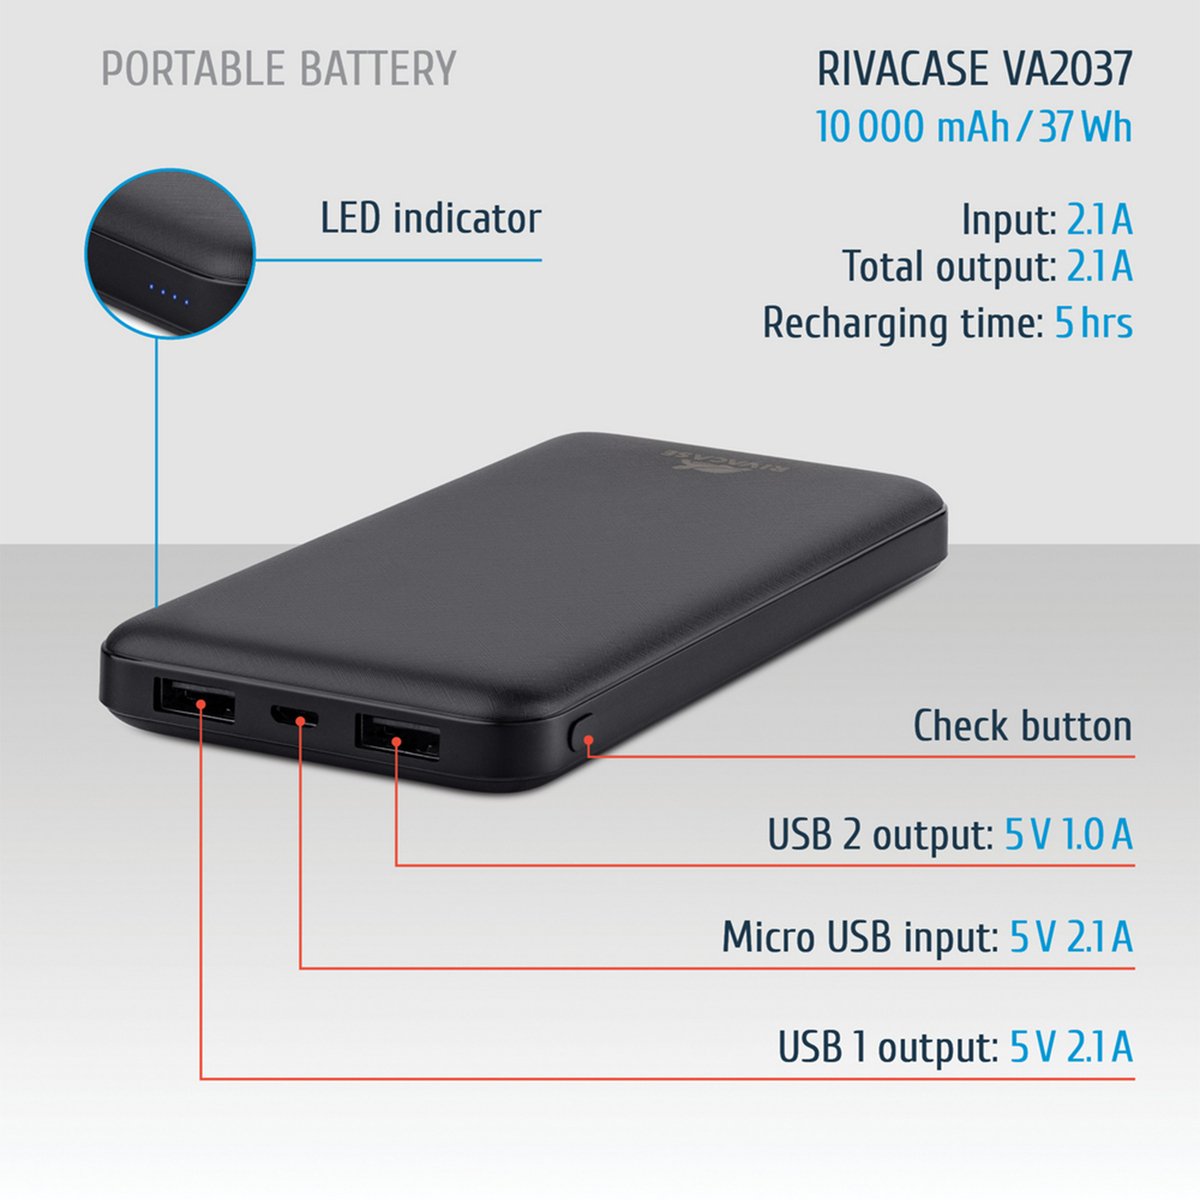 Rivacase Power Bank 10000mAh VA2037 Portable Rechargeable Battery